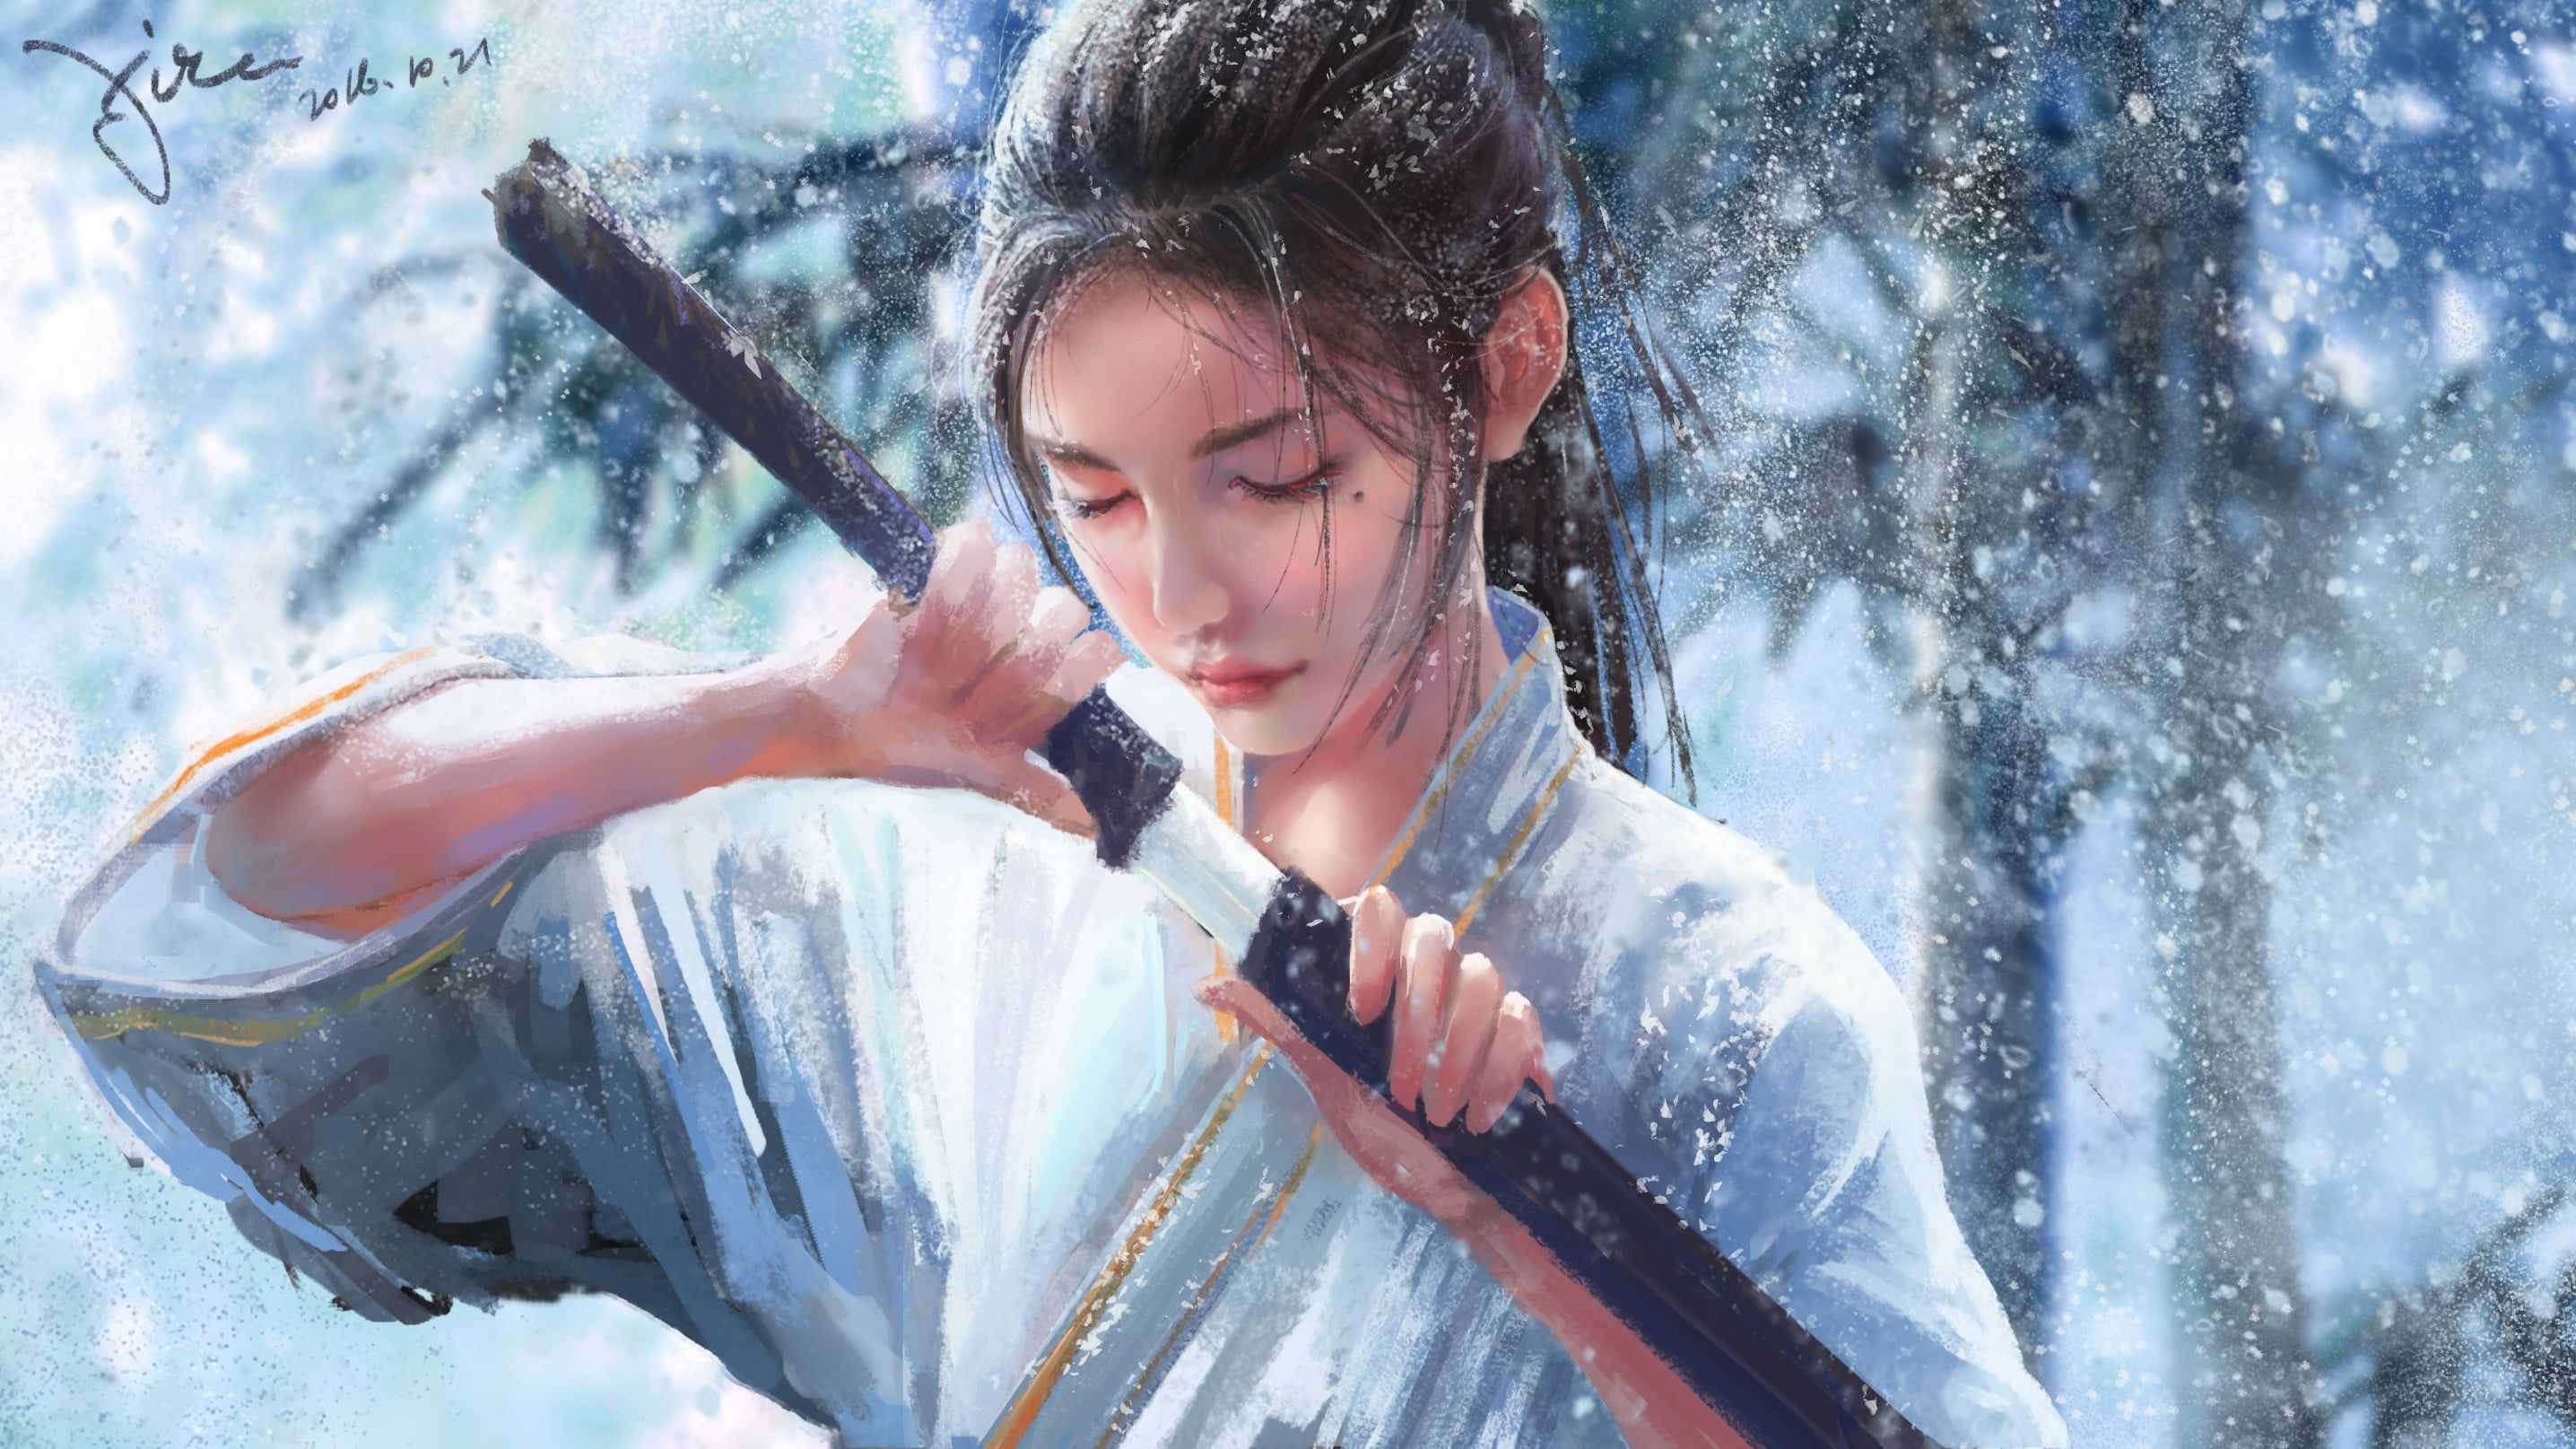 woman holding katana sword painting #women #samurai #katana #artwork #snowing fan art K #wallpaper #hdwallpaper #desktop. Samurai, Pejuang wanita, Katana